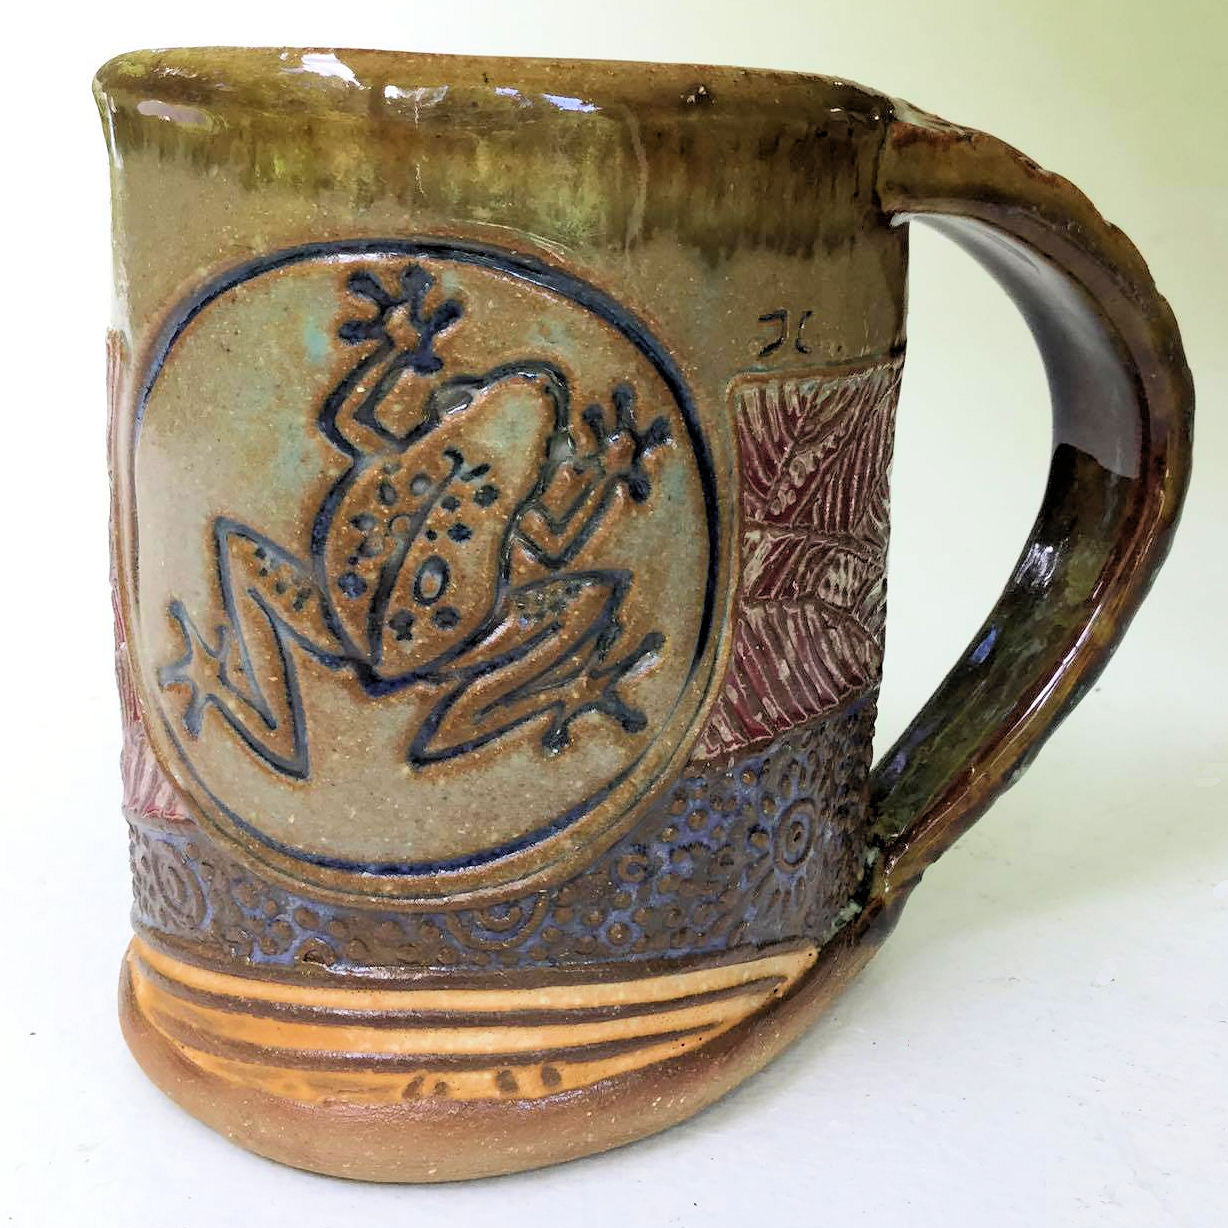 Frog Pottery Mug Coffee Cup Handmade Stoneware Tableware 12 oz